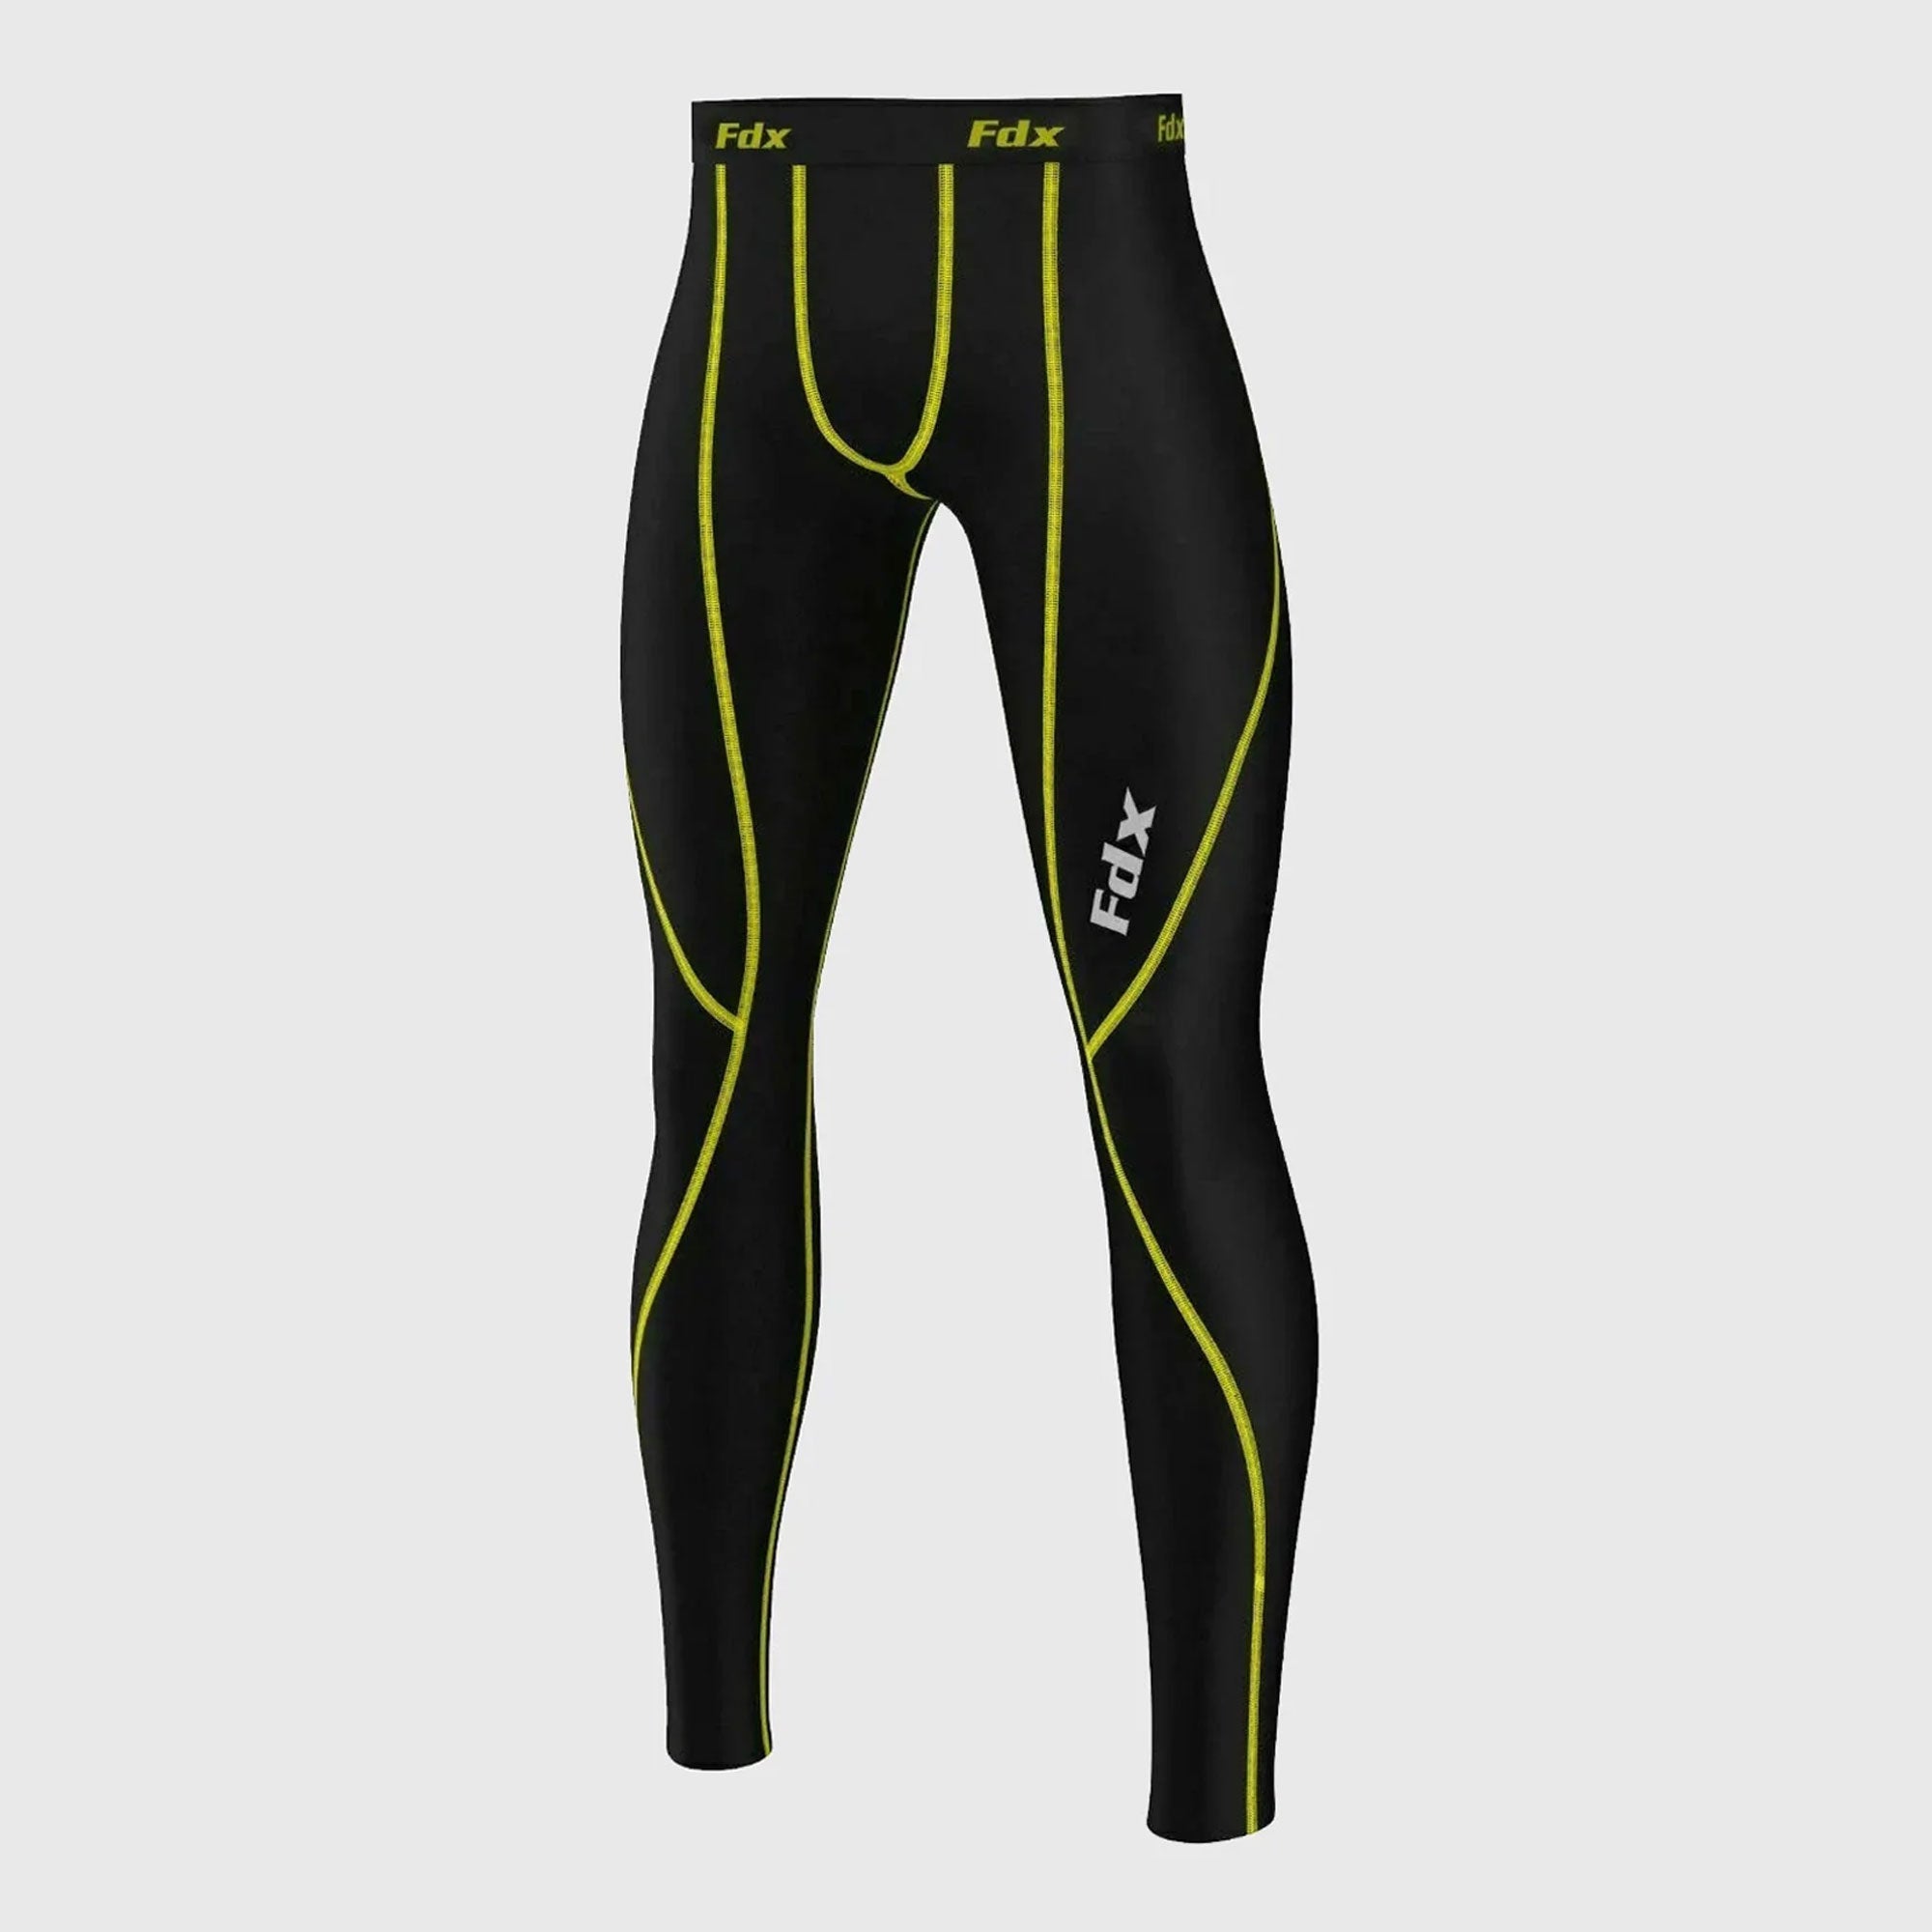 Men's Skinfit Black Yellow Spandex Tights Compression Pants Small 32 | eBay